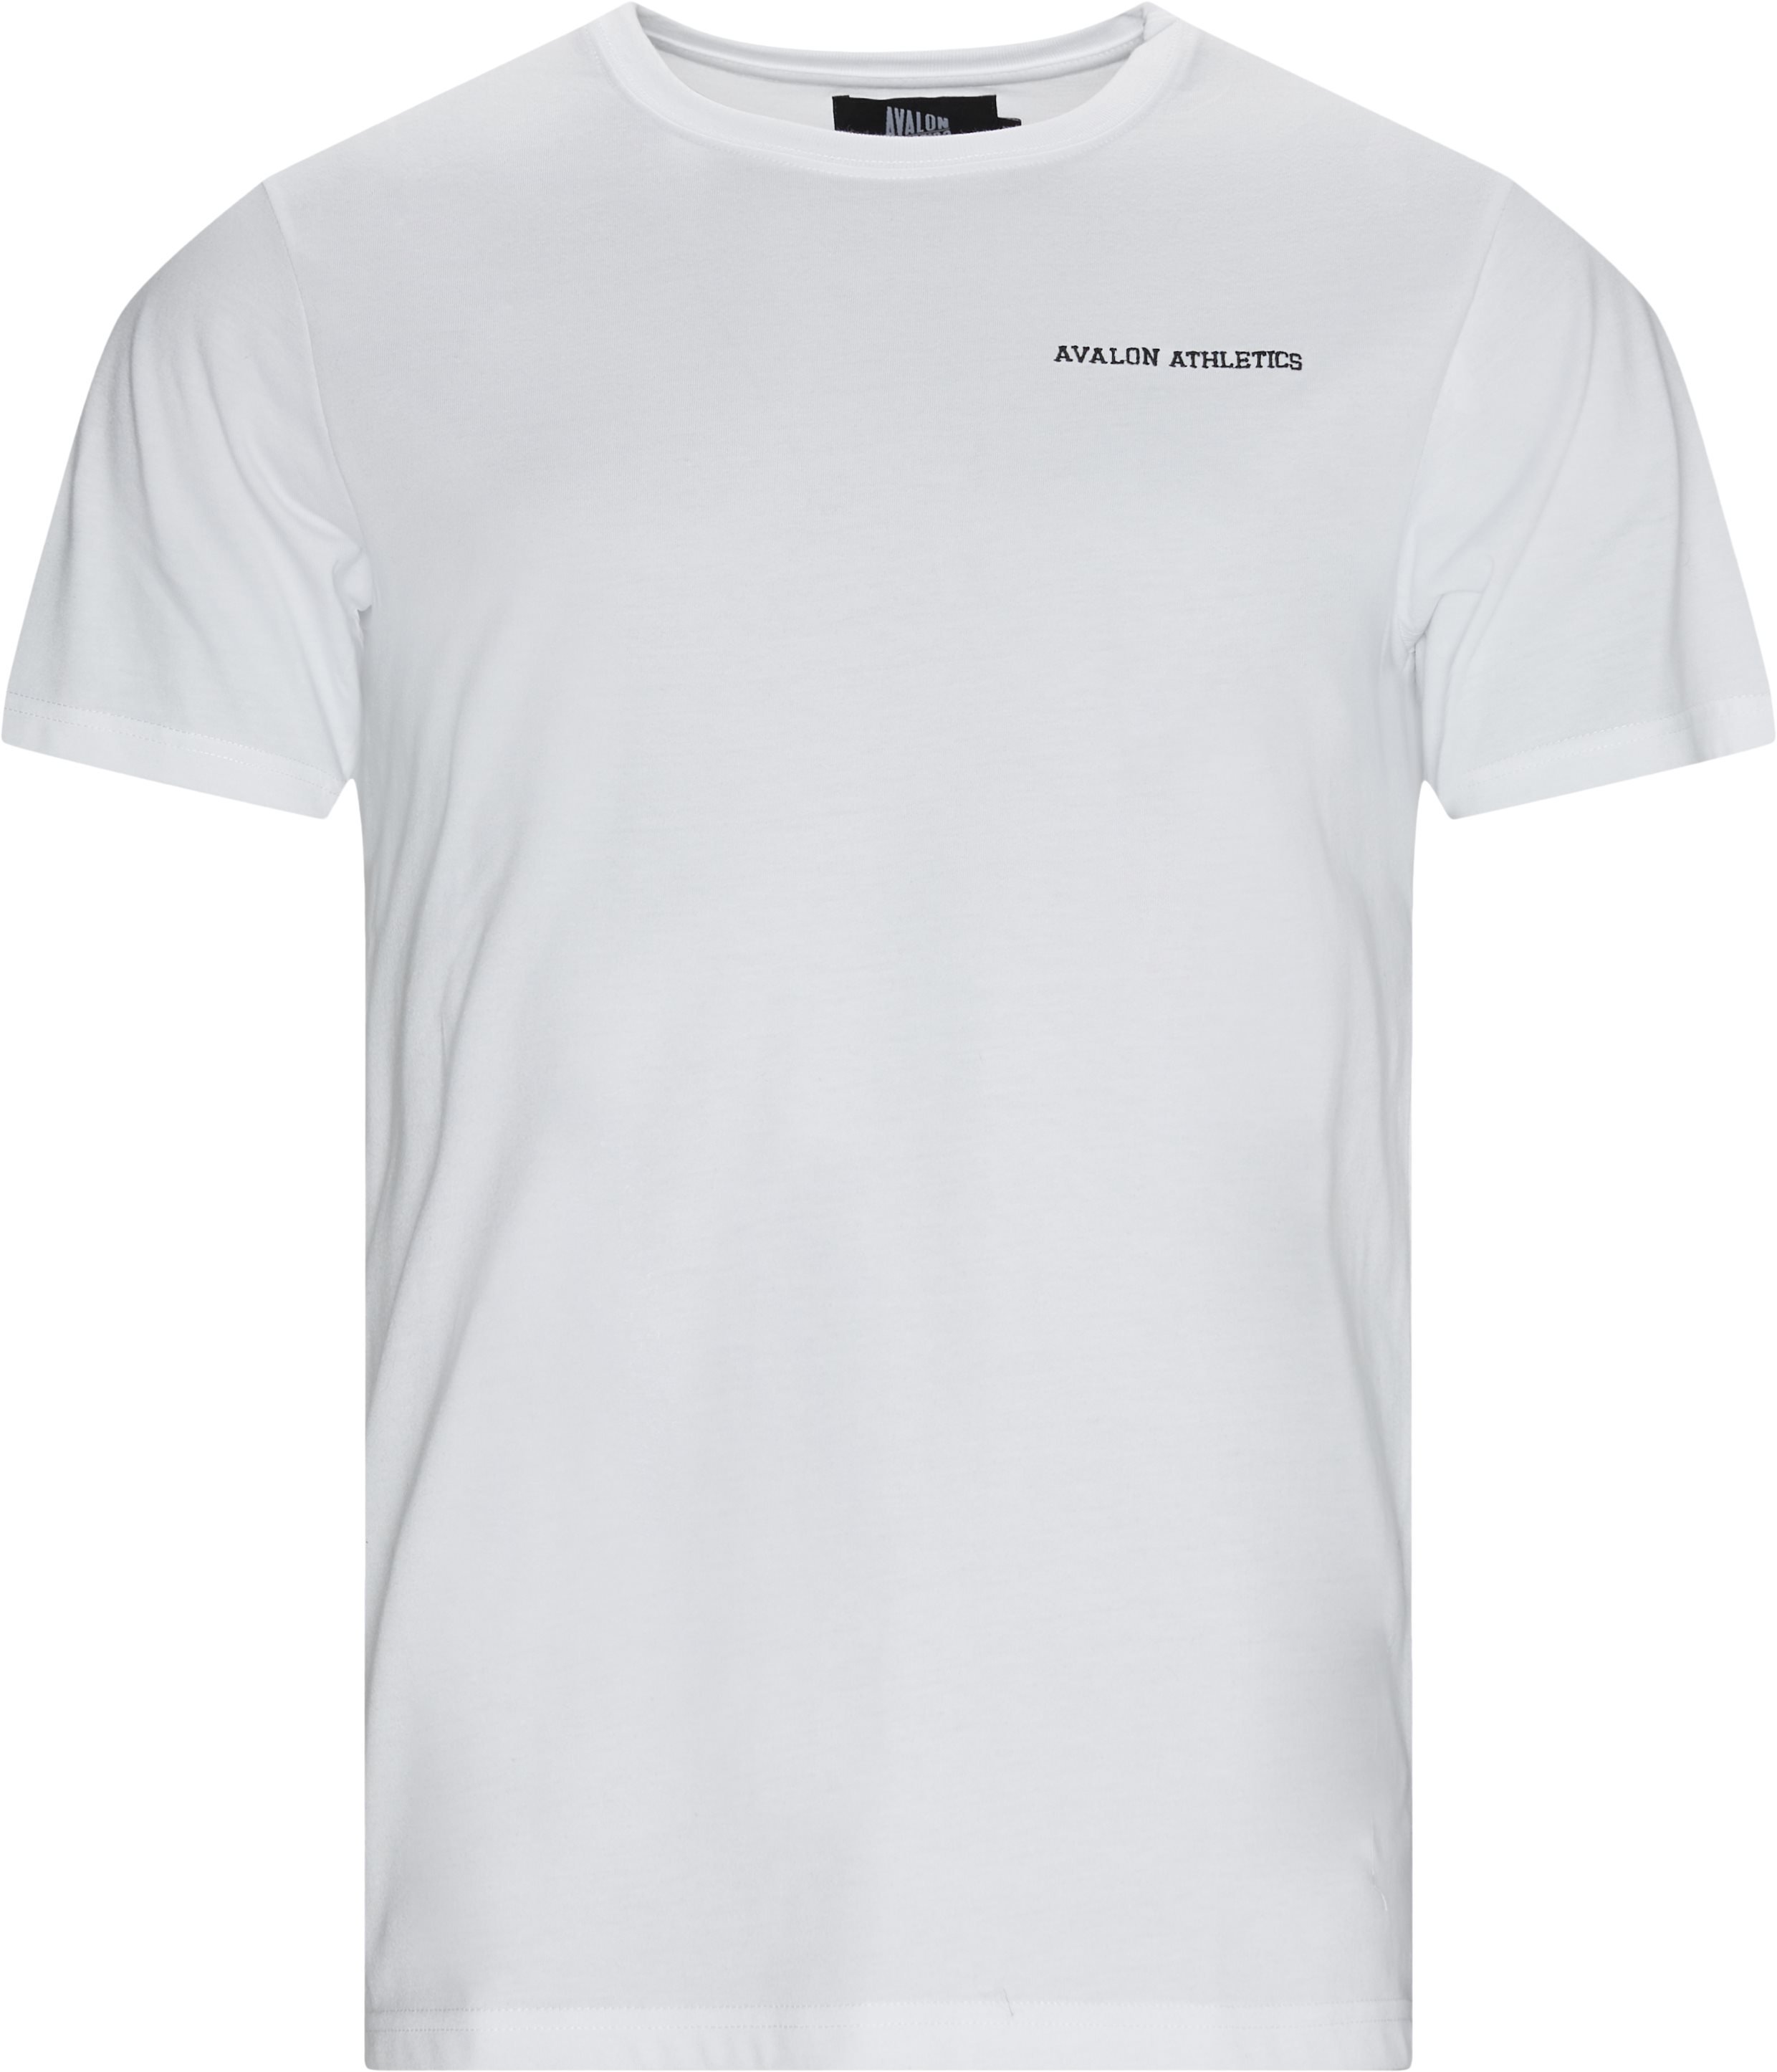 HAZELL Tee - T-shirts - Regular fit - White